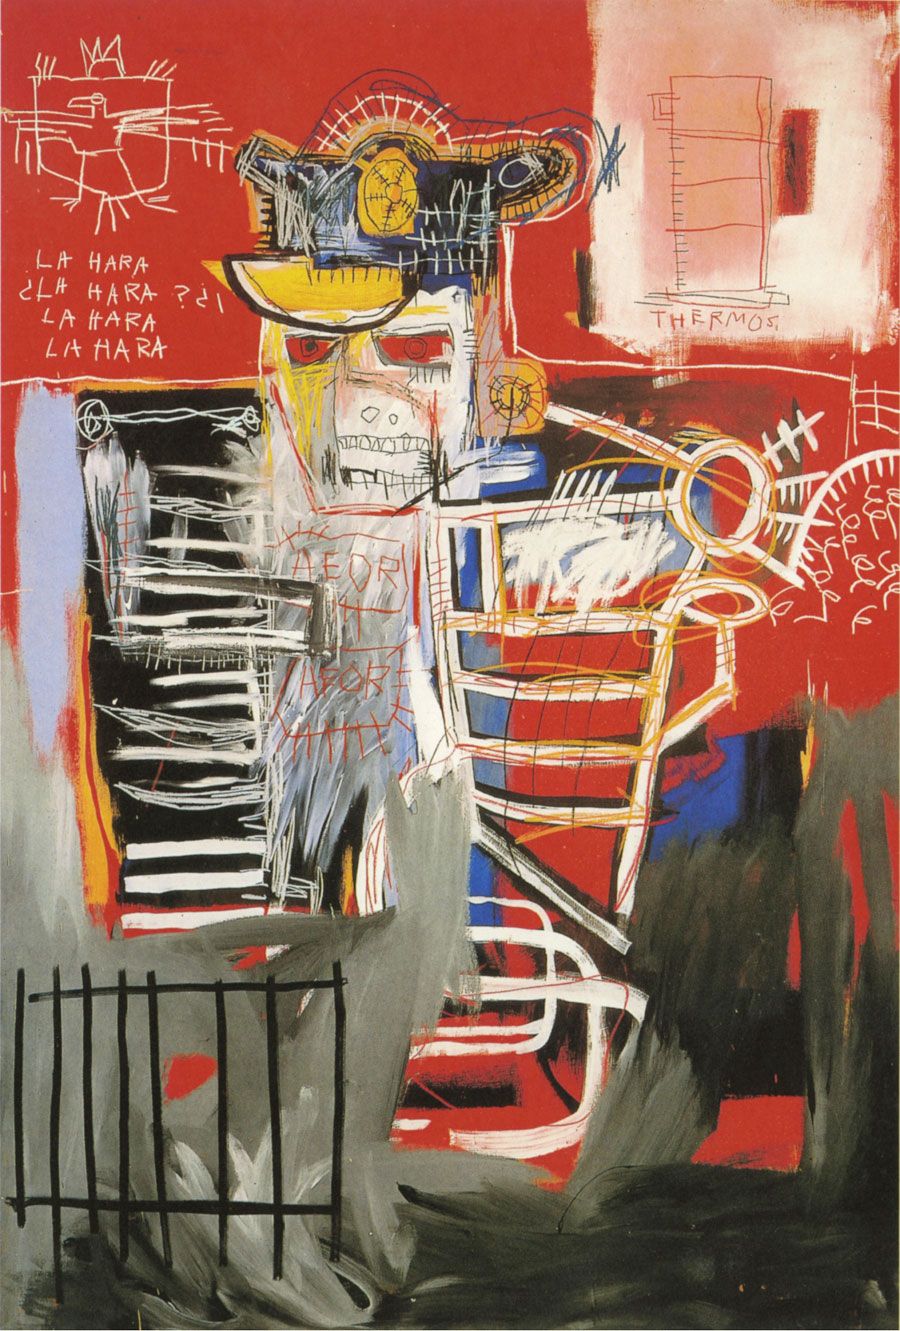 "La Hara" de Basquiat 